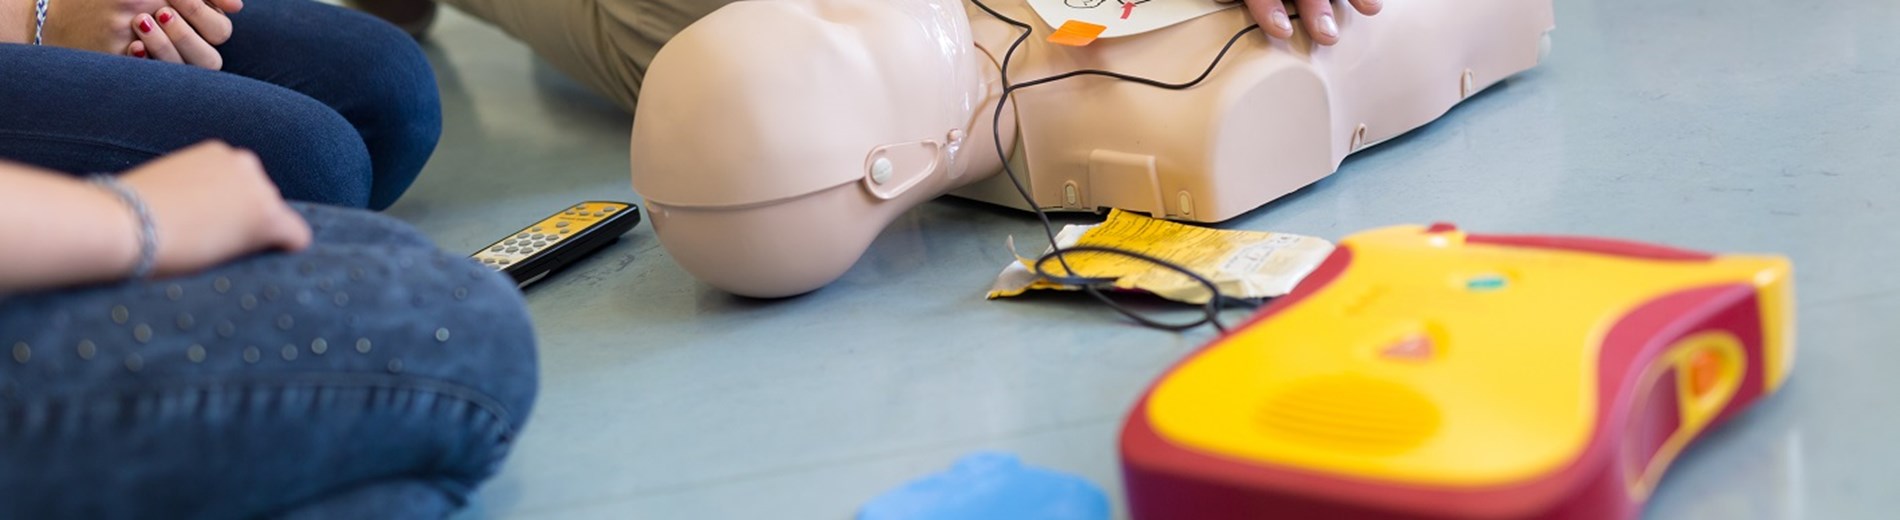 Dover: New defibrillator installed outside café at Kearsney Abbey